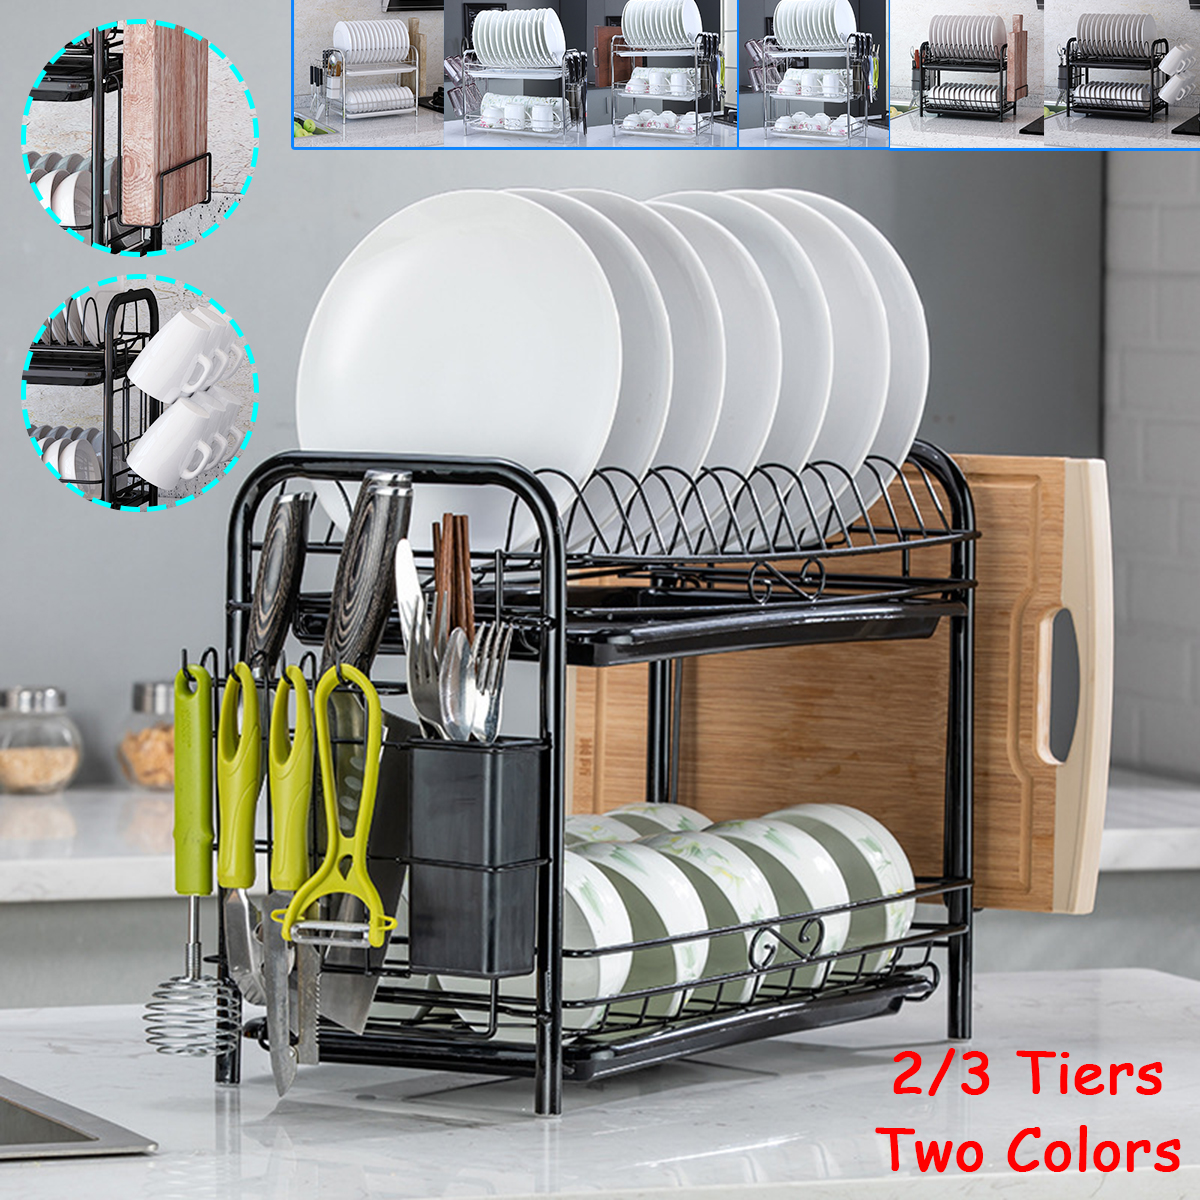 23-Tiers-Dish-Drainer-Holder-Metal-Drying-Rack-Basket-Bowl-Dish-Draining-Shelf-Dryer-Tray-Holder-Kit-1732659-1